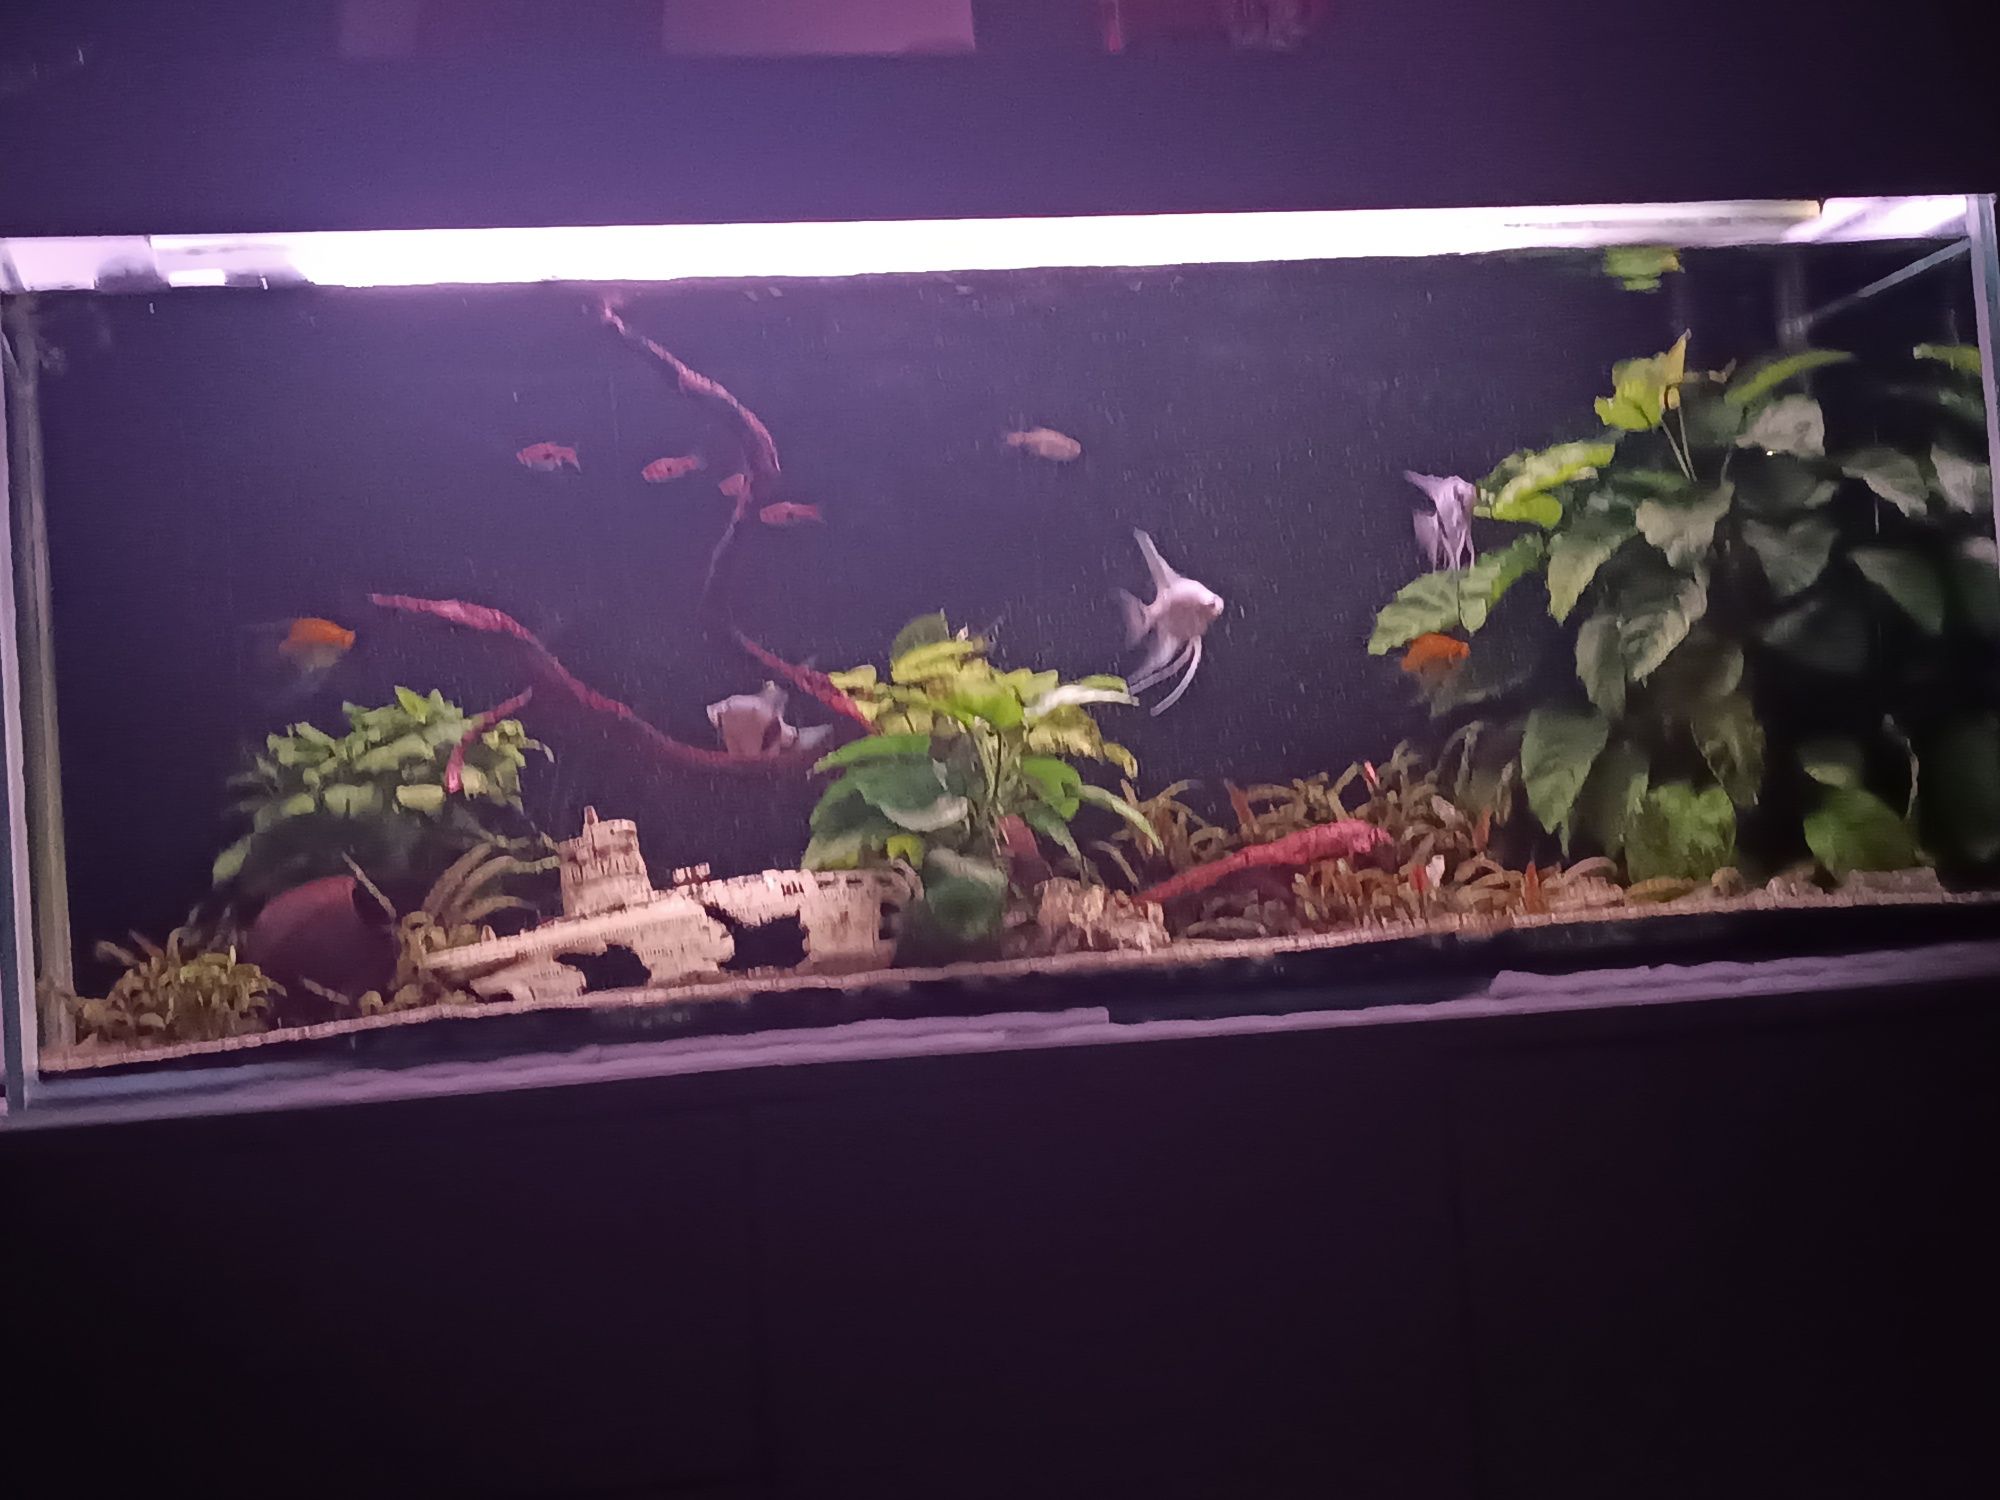 Akwarium z rybami - 120 cm skalar danio rośliny